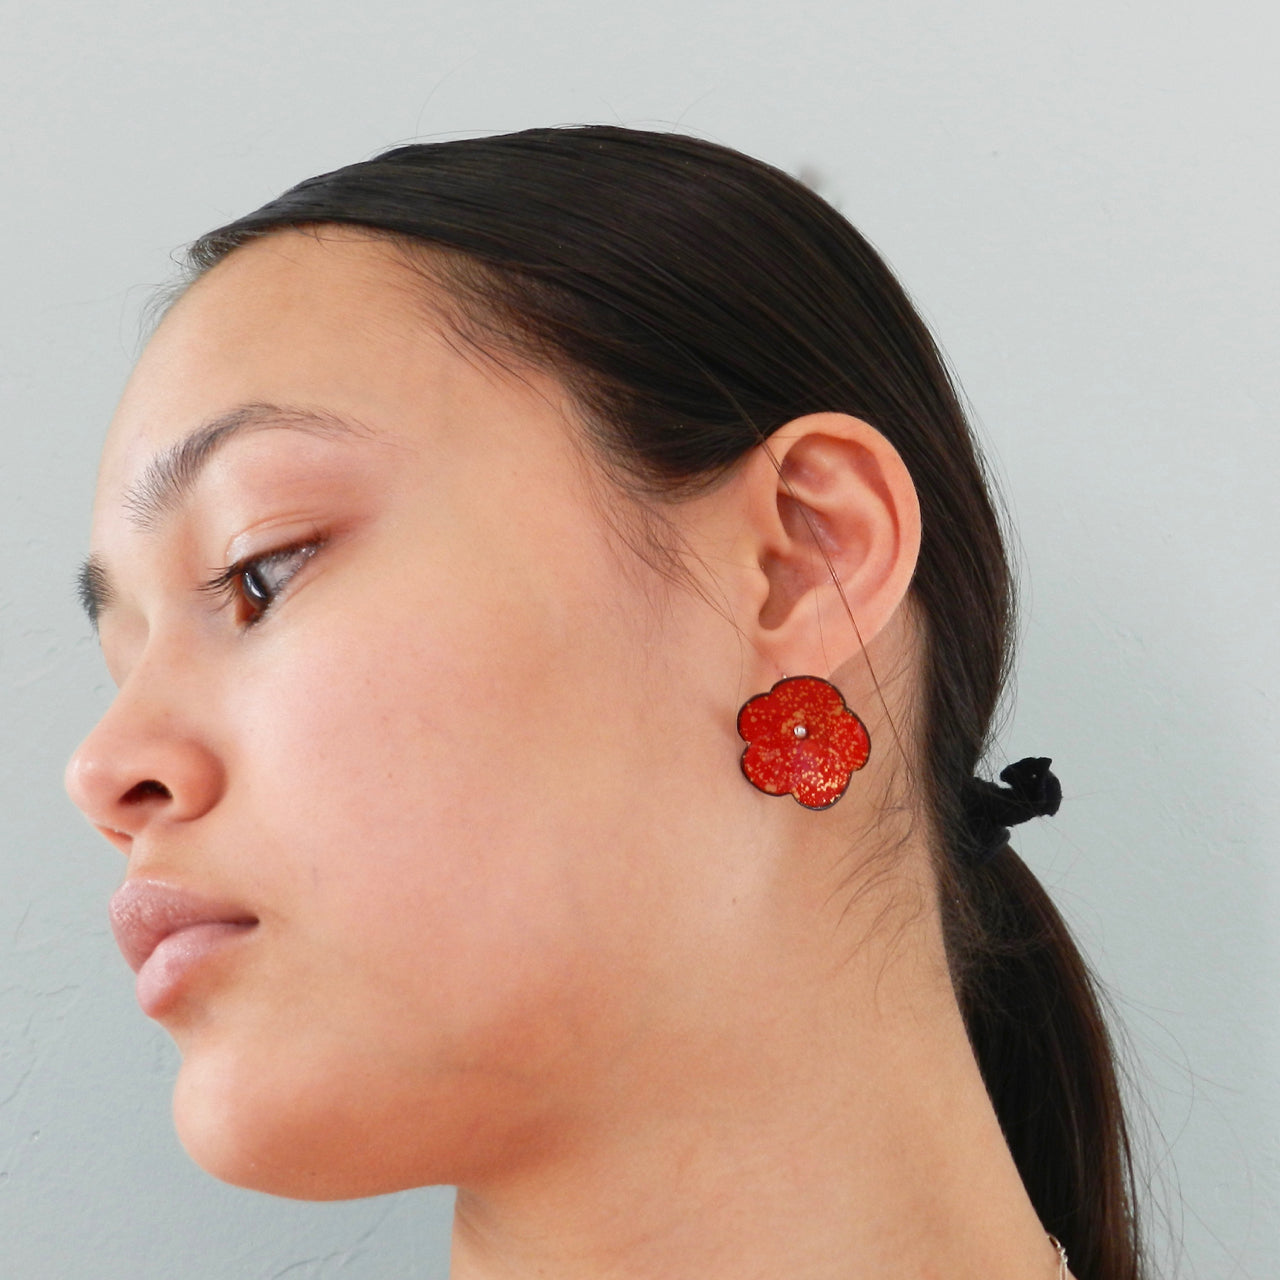 Imperial Flower Enameled Earrings